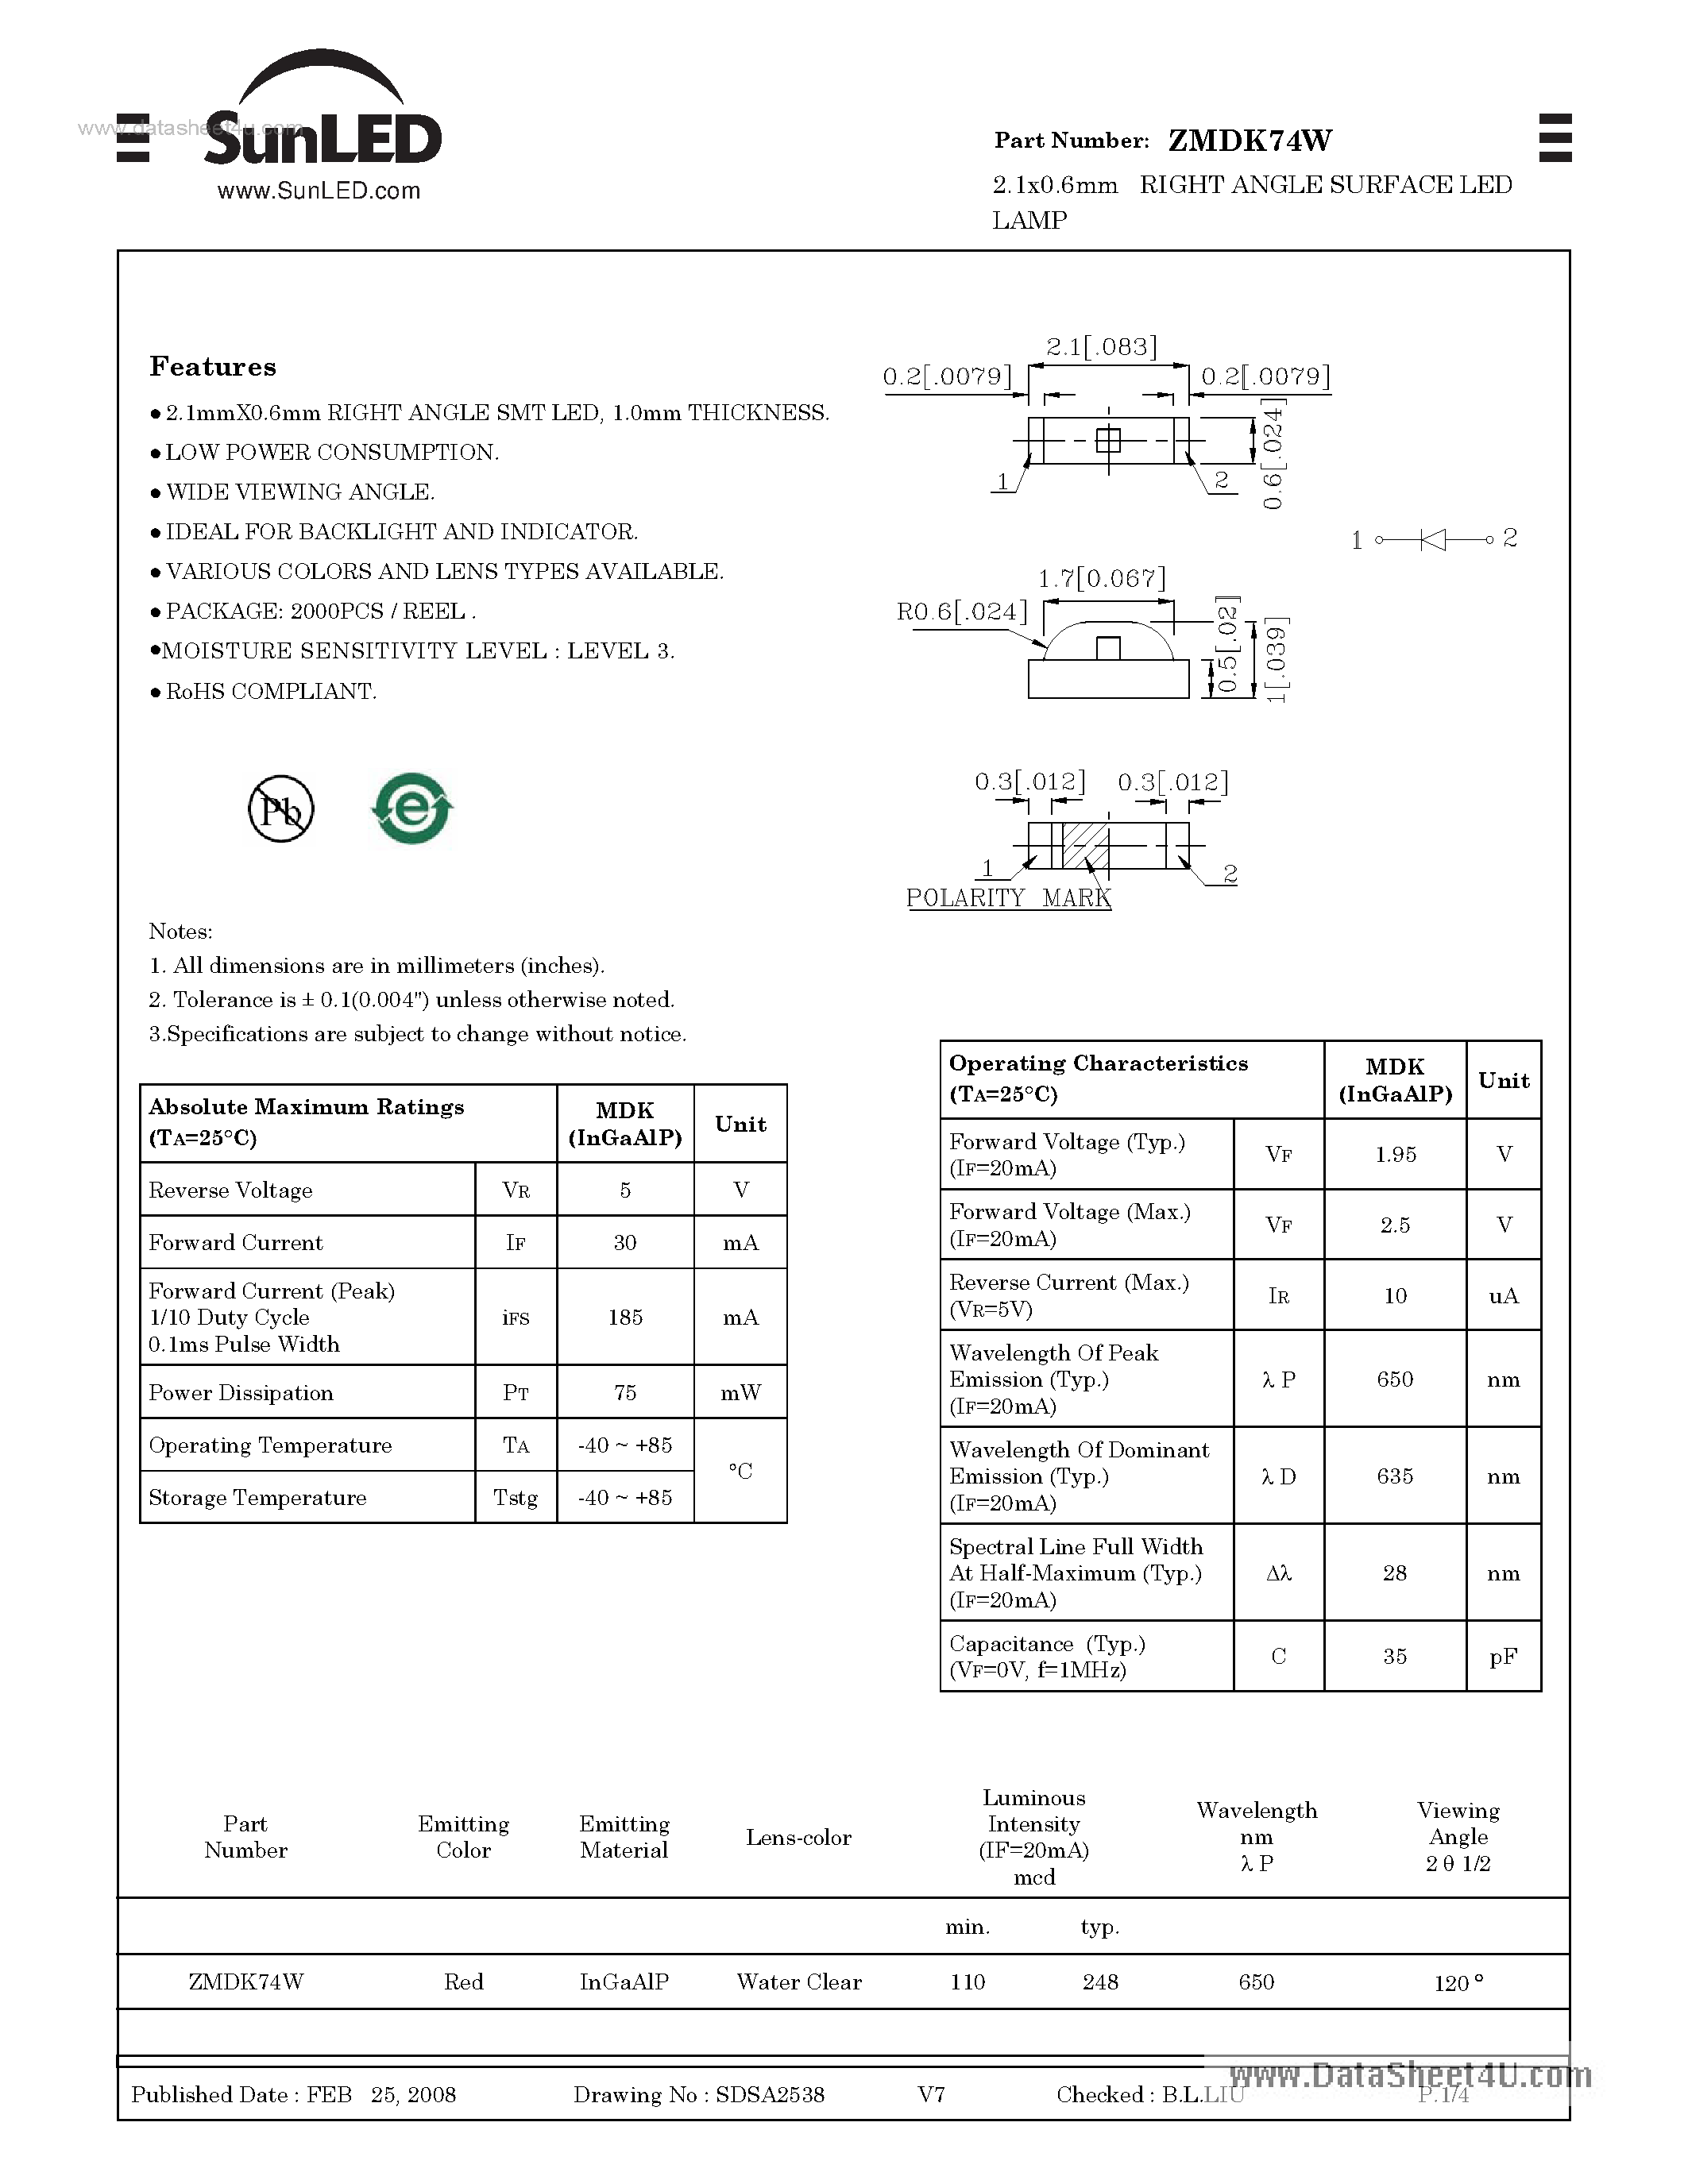 Datasheet ZMDK74W - 2.1x0.6mm RIGHT ANGLE SURFACE LED LAMP page 1